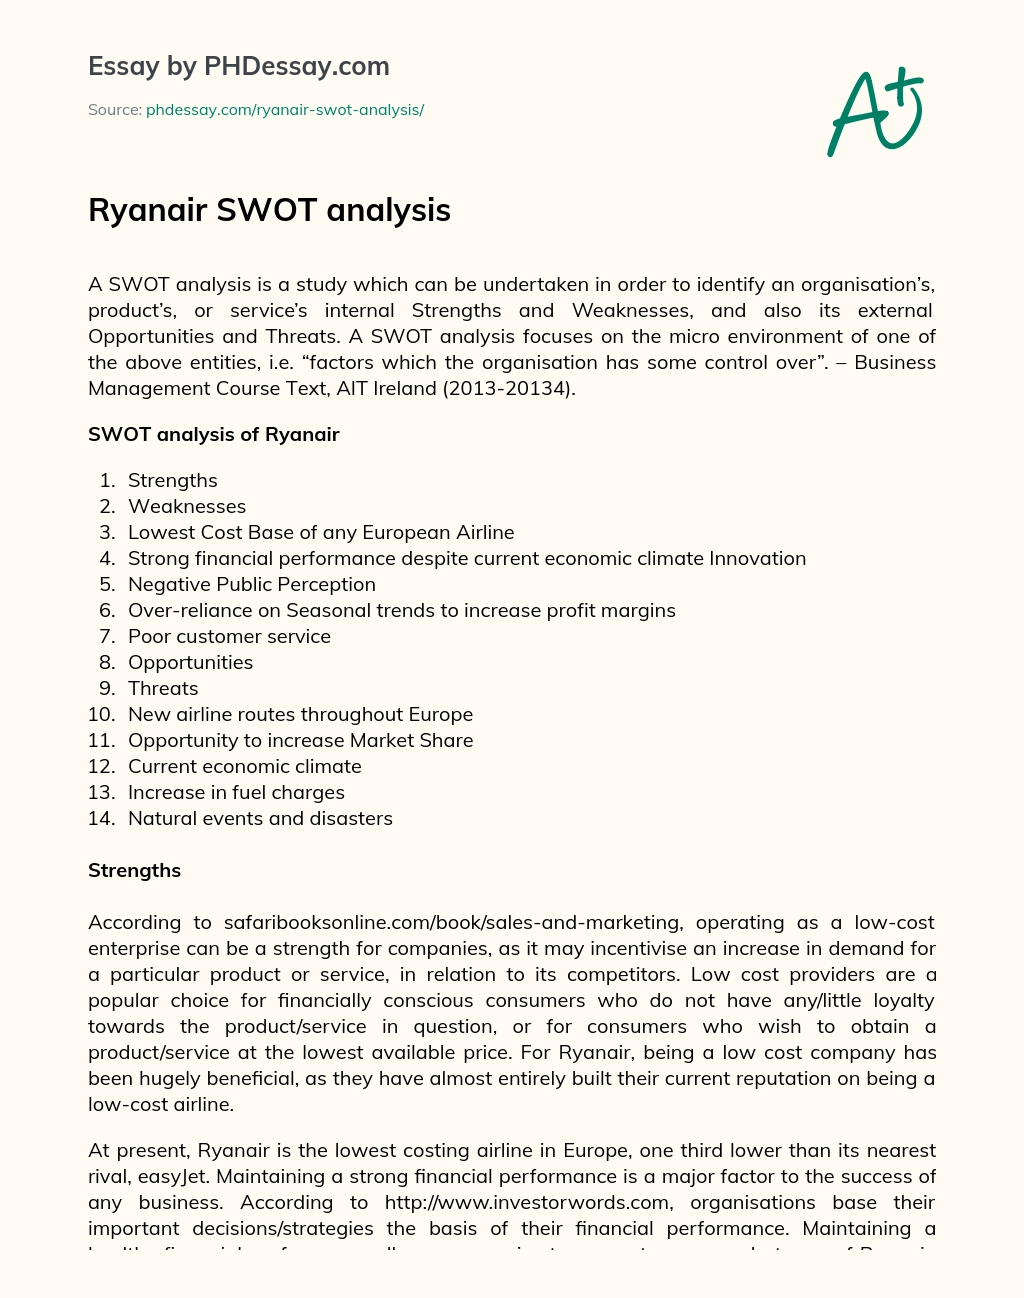 Ryanair SWOT analysis essay